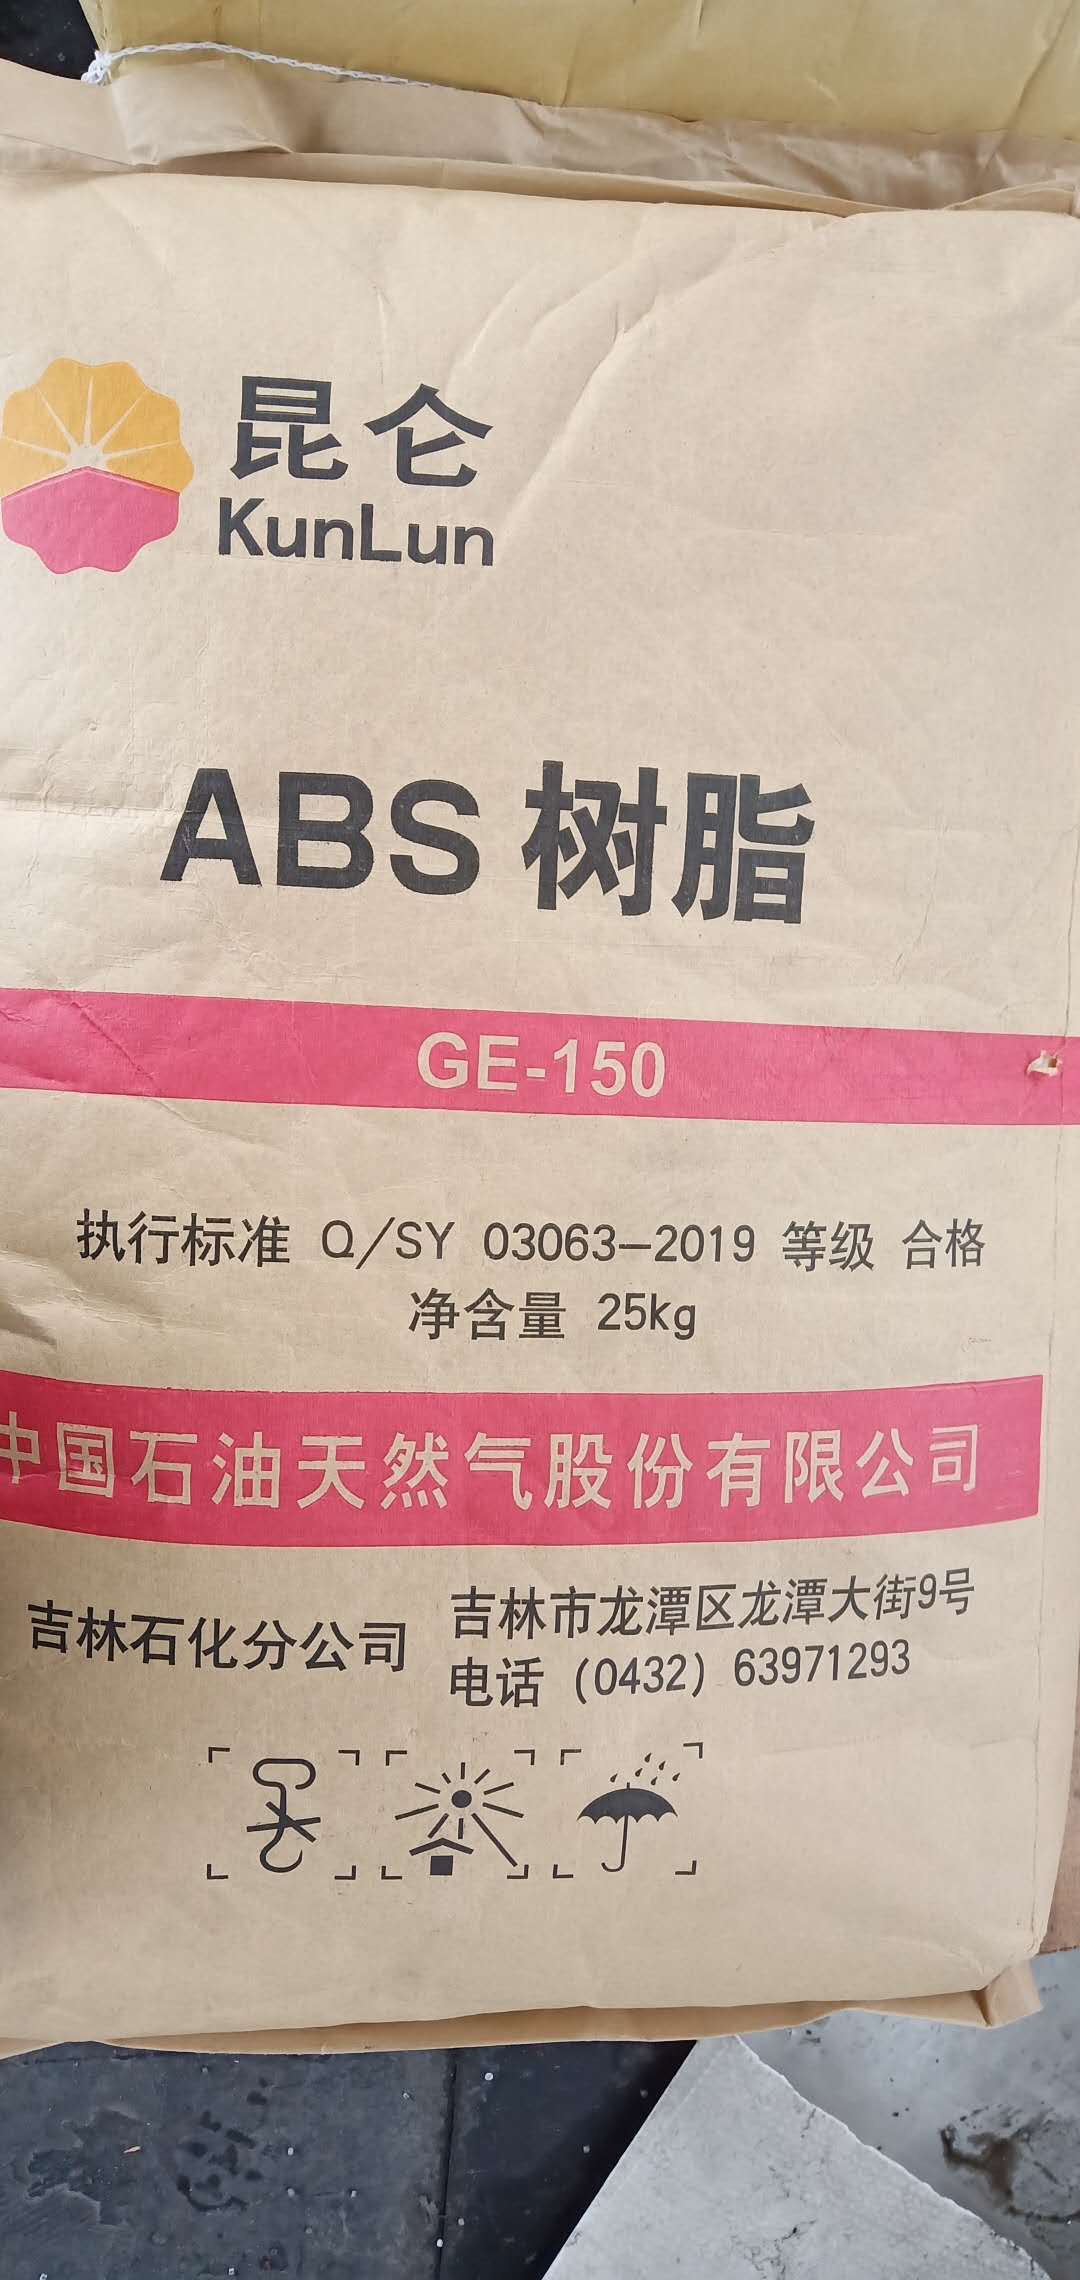 GE-150中石油吉林昆仑ABS树脂20217B-5